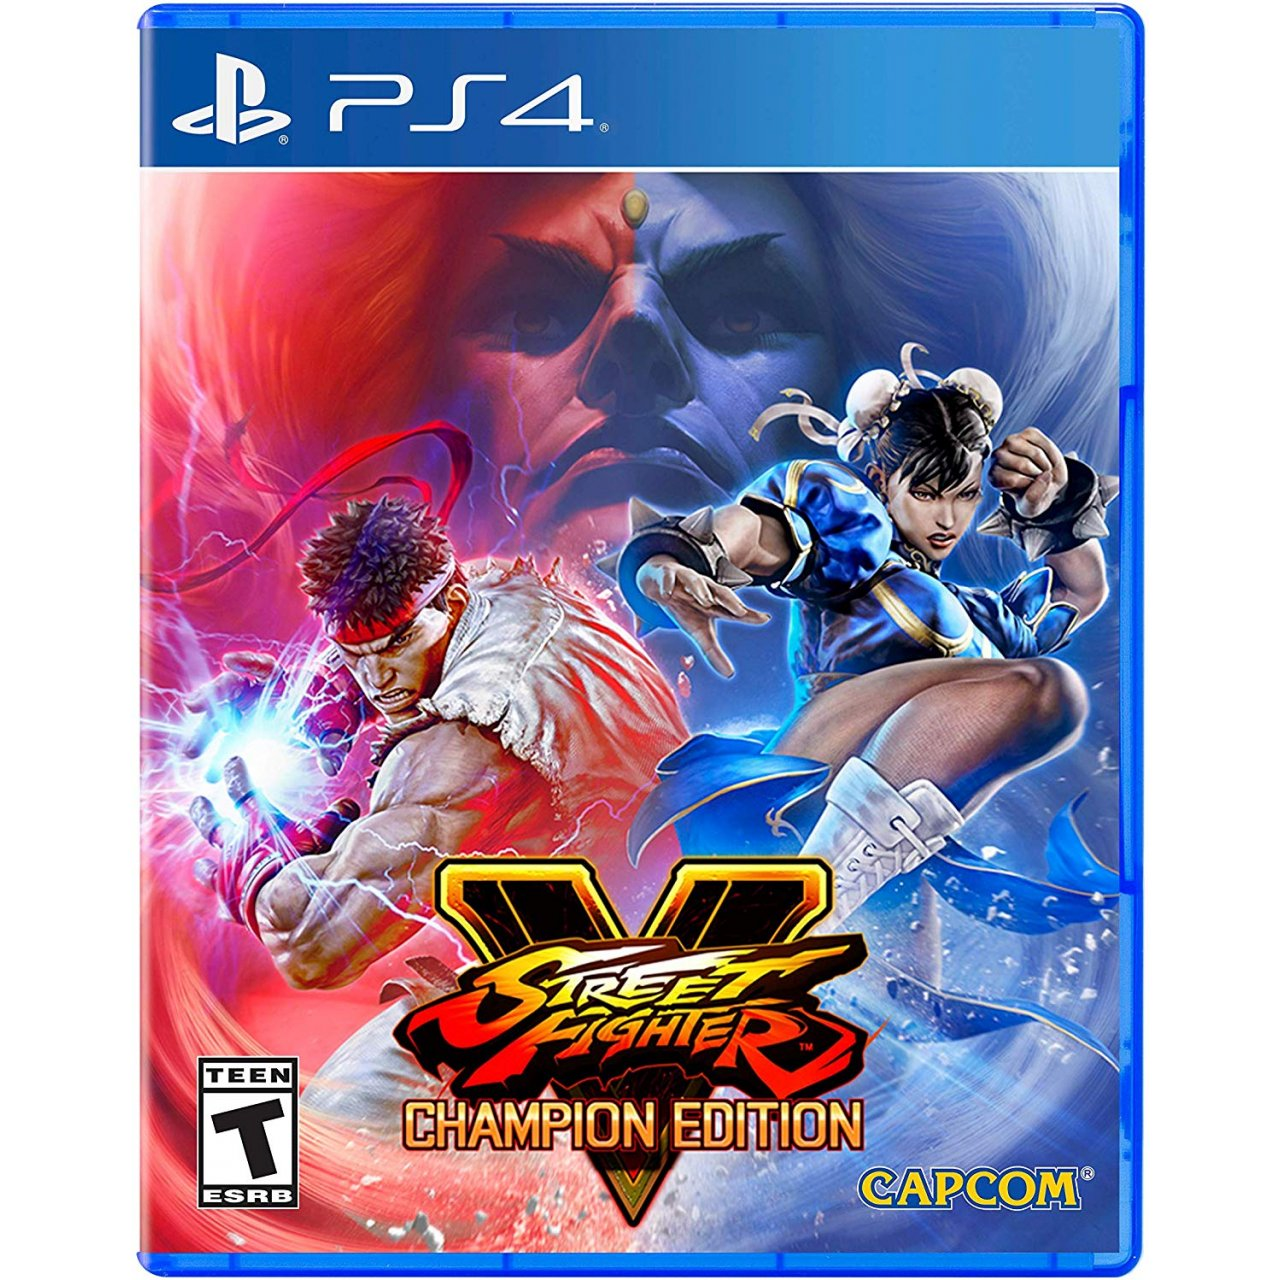 Street Fighter v: Champion Edition ps4. Street Fighter 5 ps4. Street Fighter 5 Champion Edition ps4. Street Fighter PLAYSTATION 4. V soundtrack